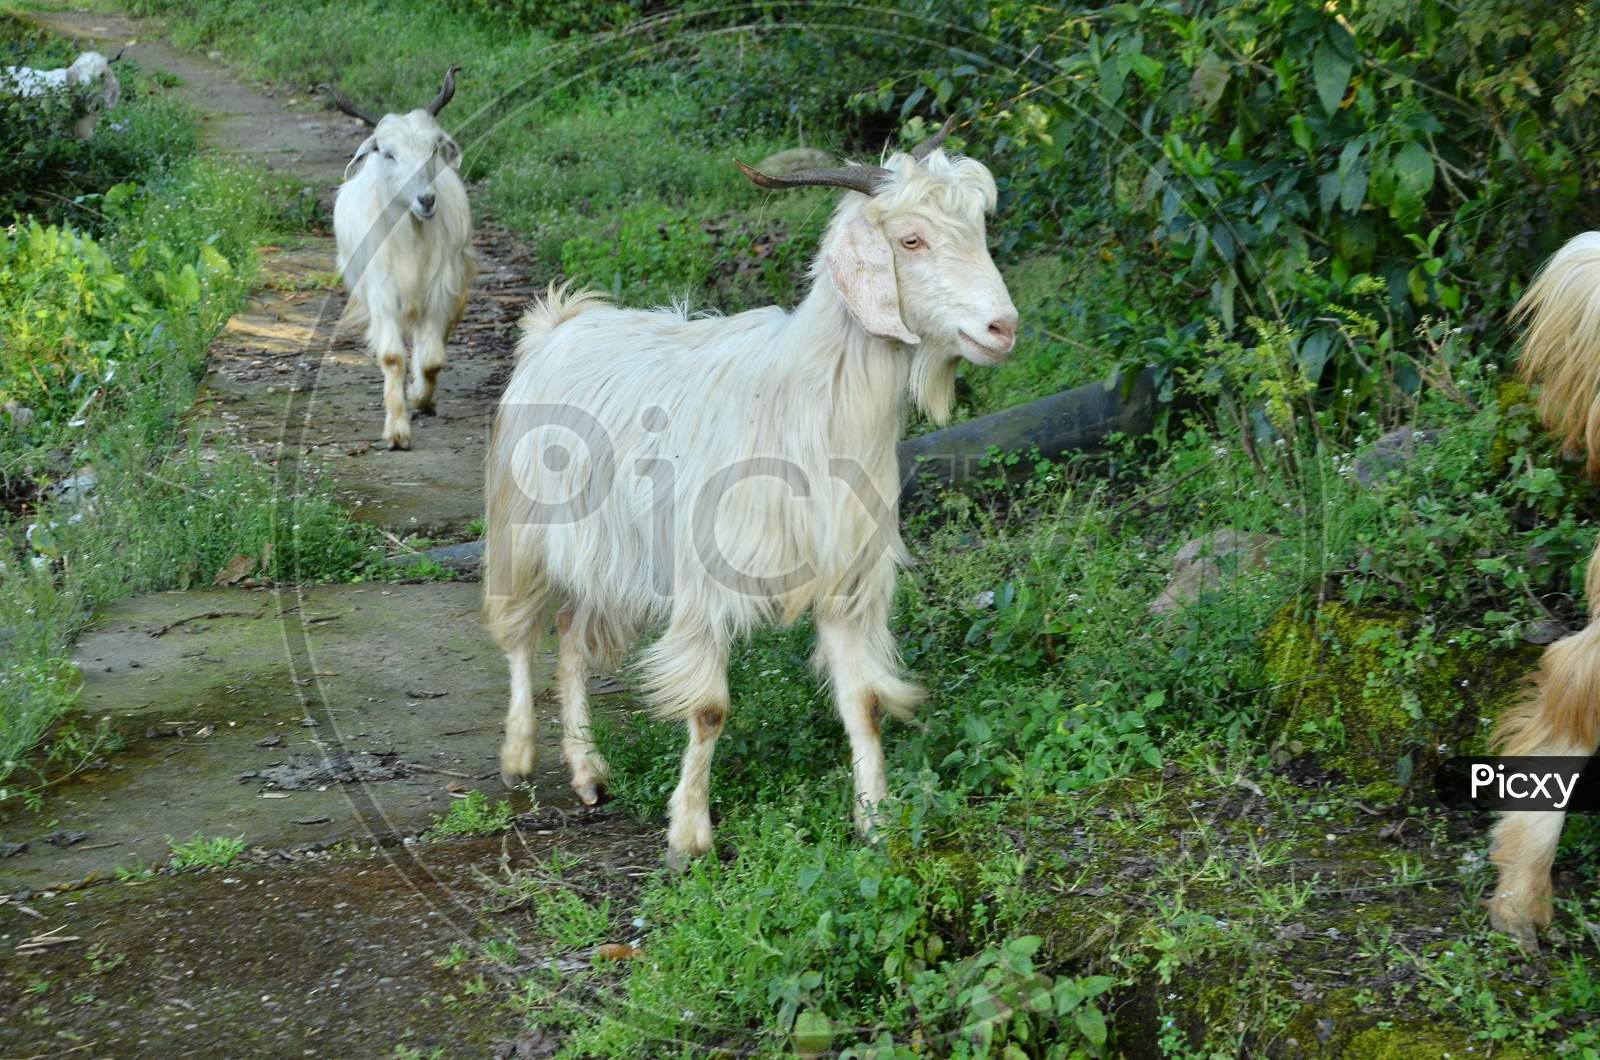 Goats at natural location in Himachal Pradesh, India